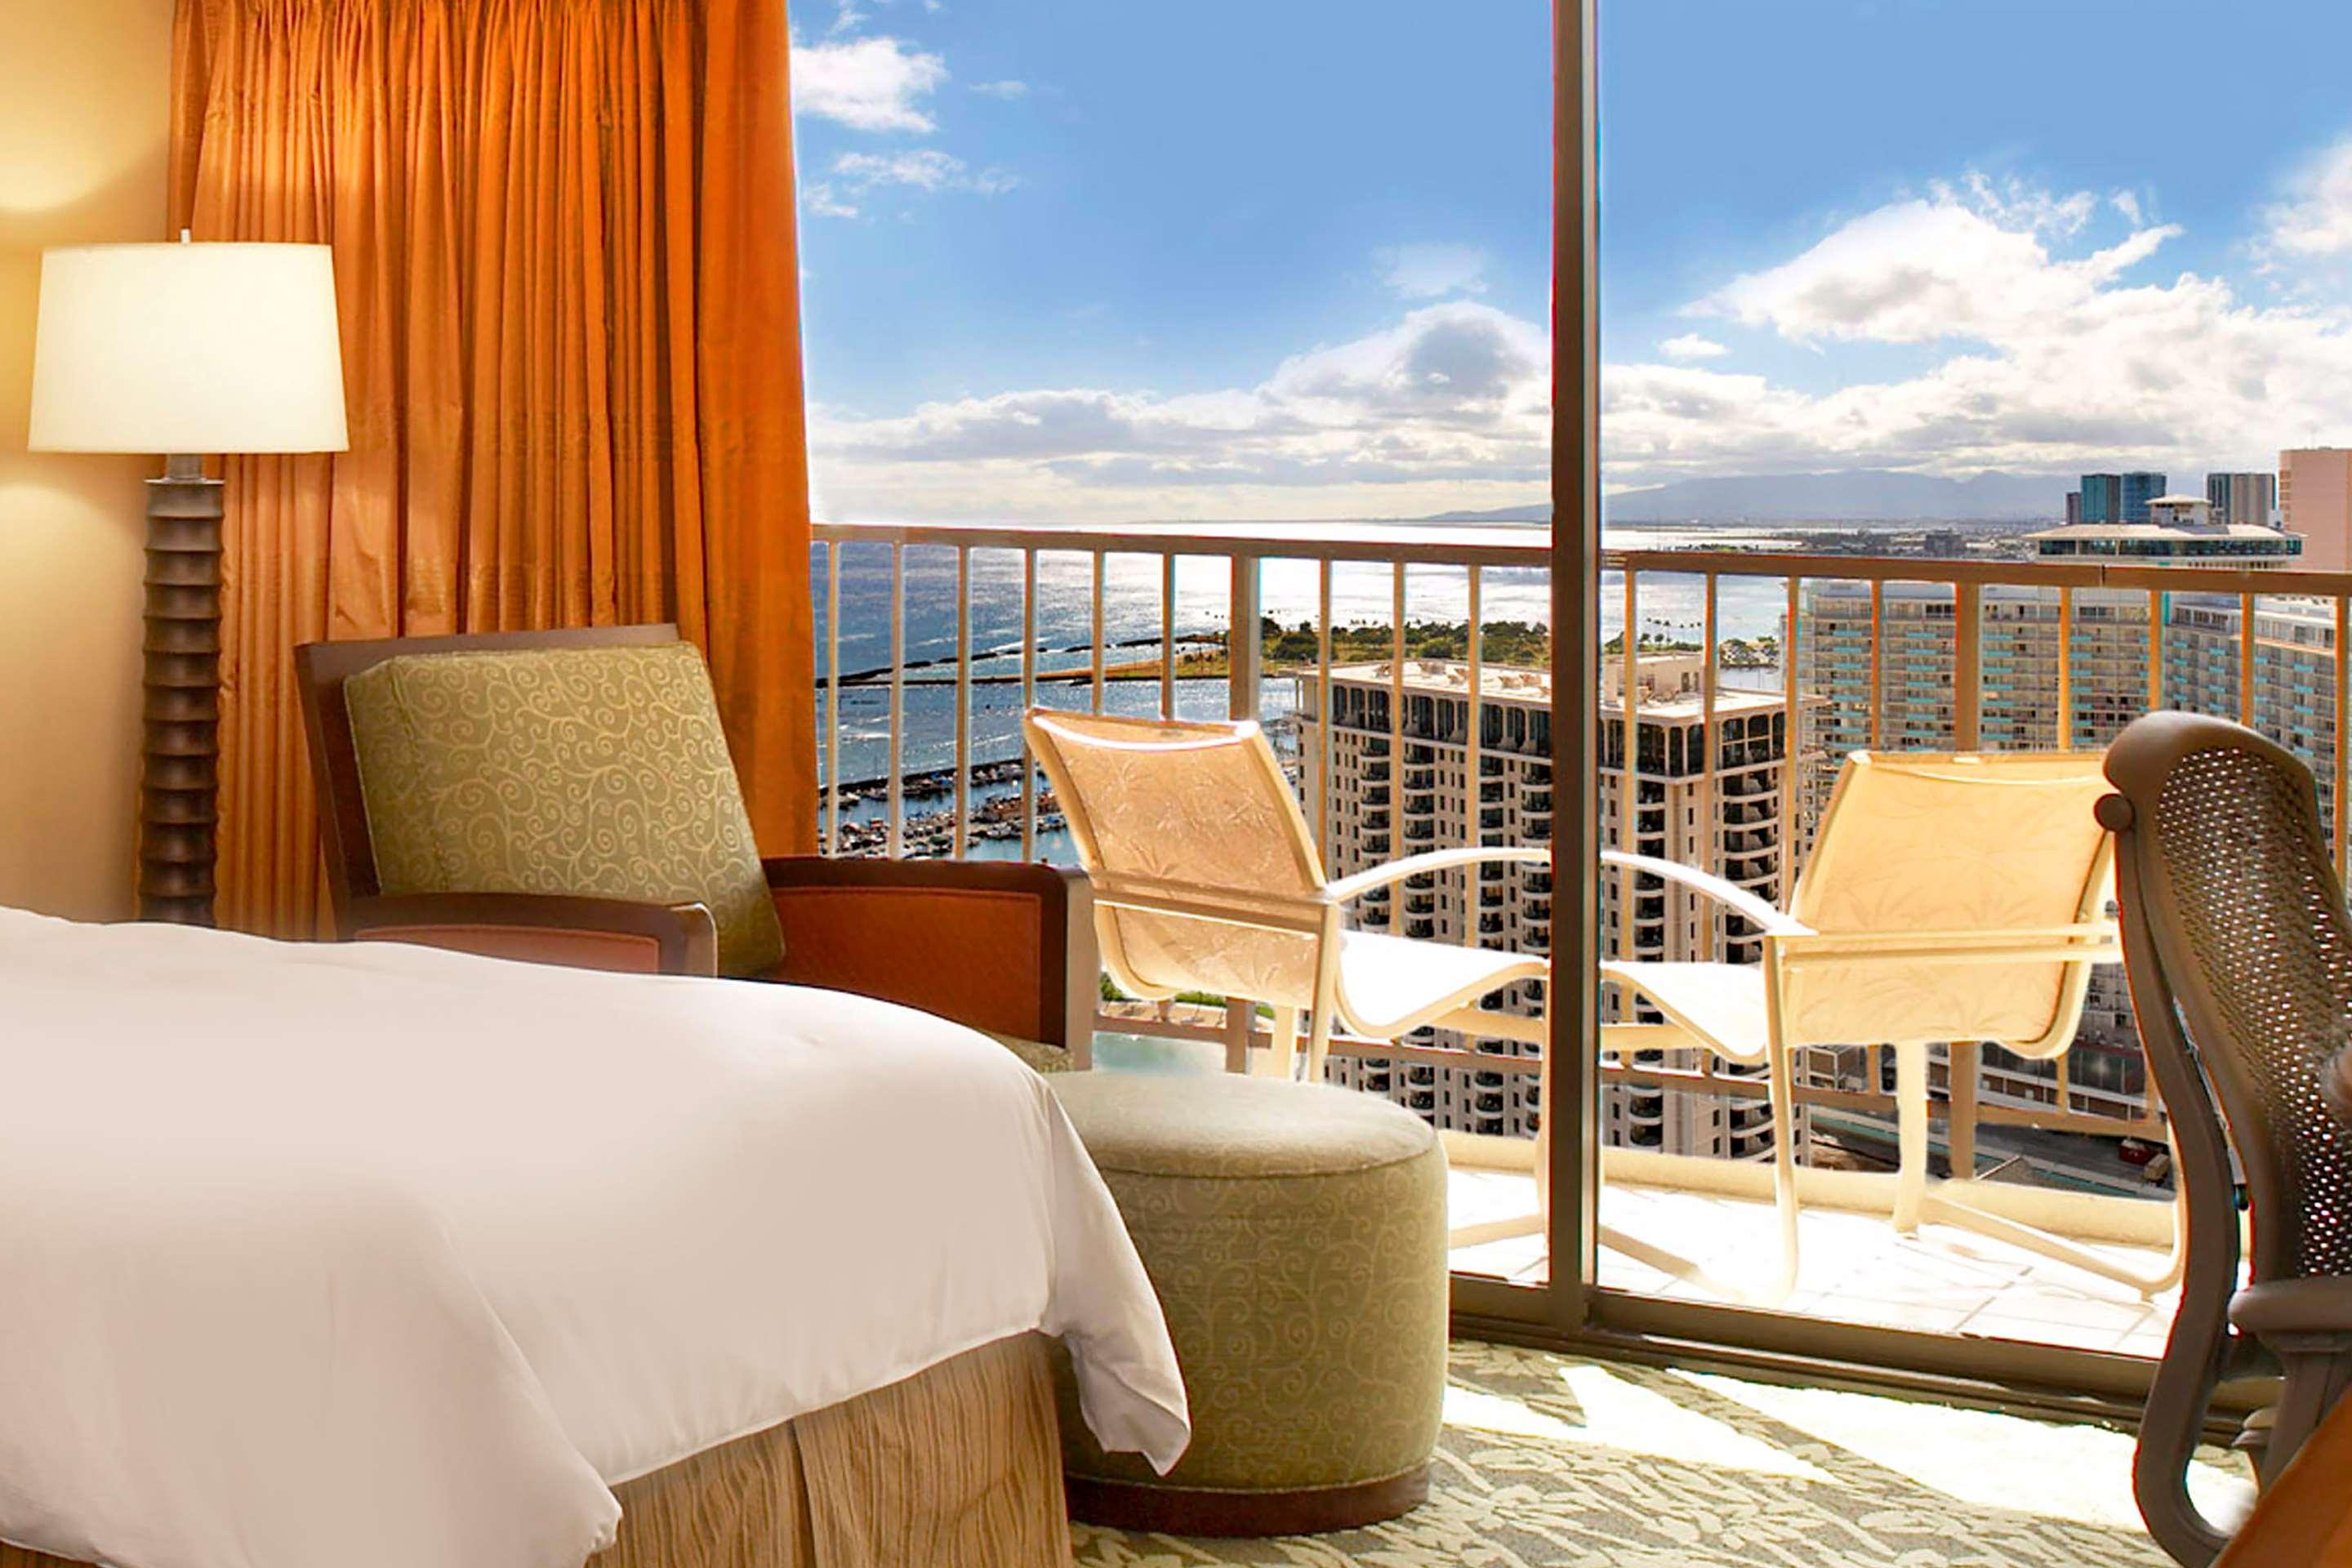 Review: Hilton Hawaiian Village Full Resort and Rainbow Tower Room Tour